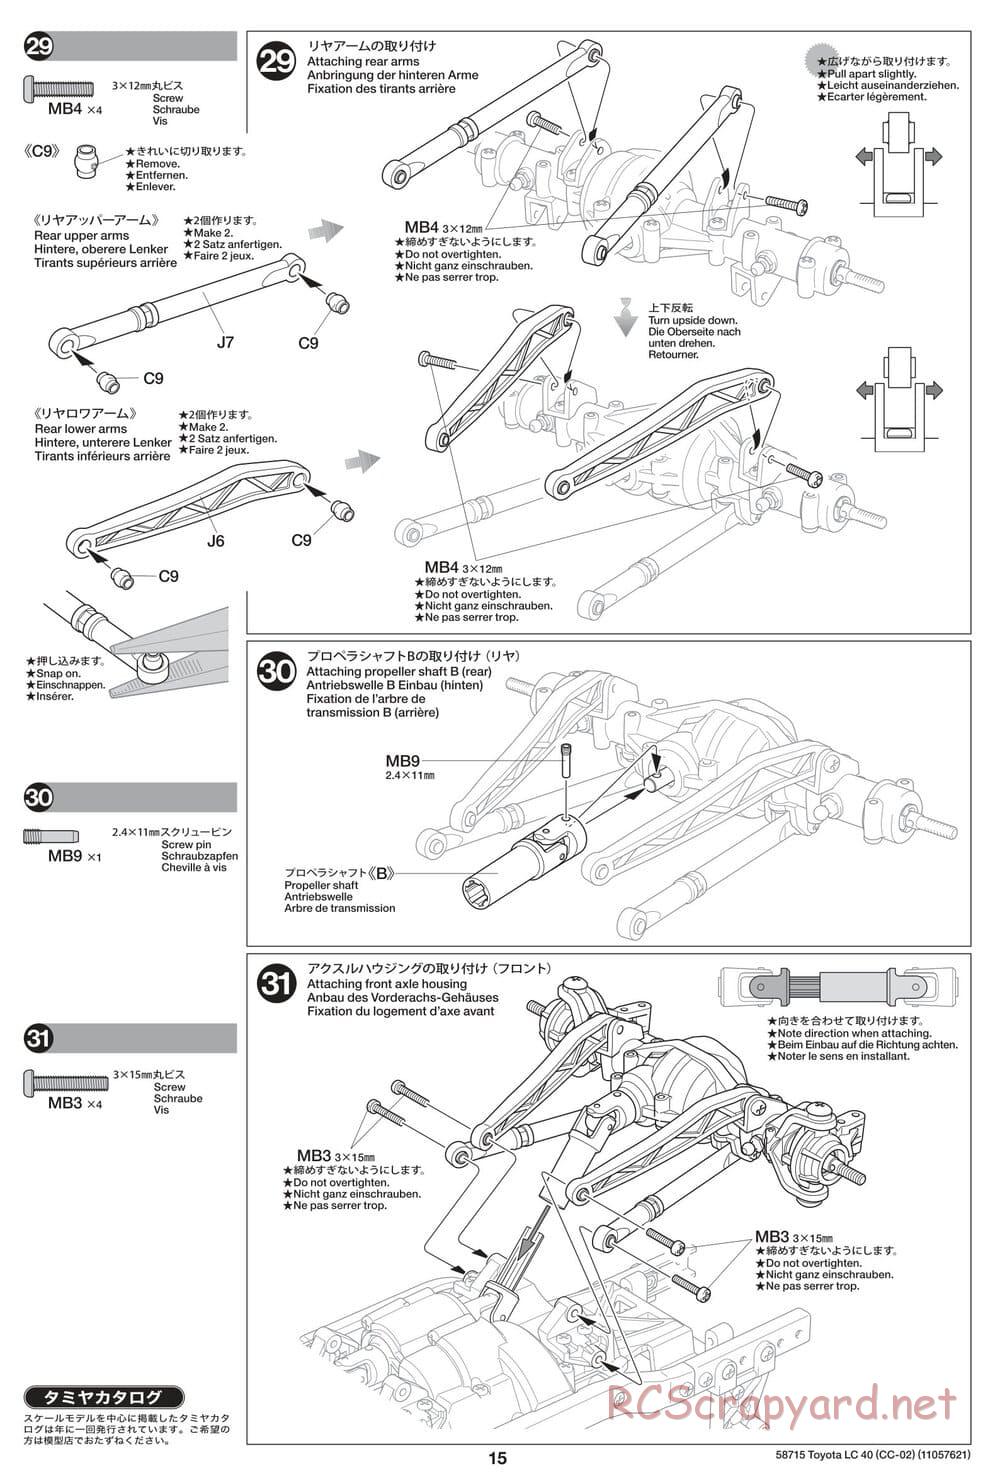 Tamiya - Toyota Land Cruiser 40 - CC-02 Chassis - Manual - Page 15